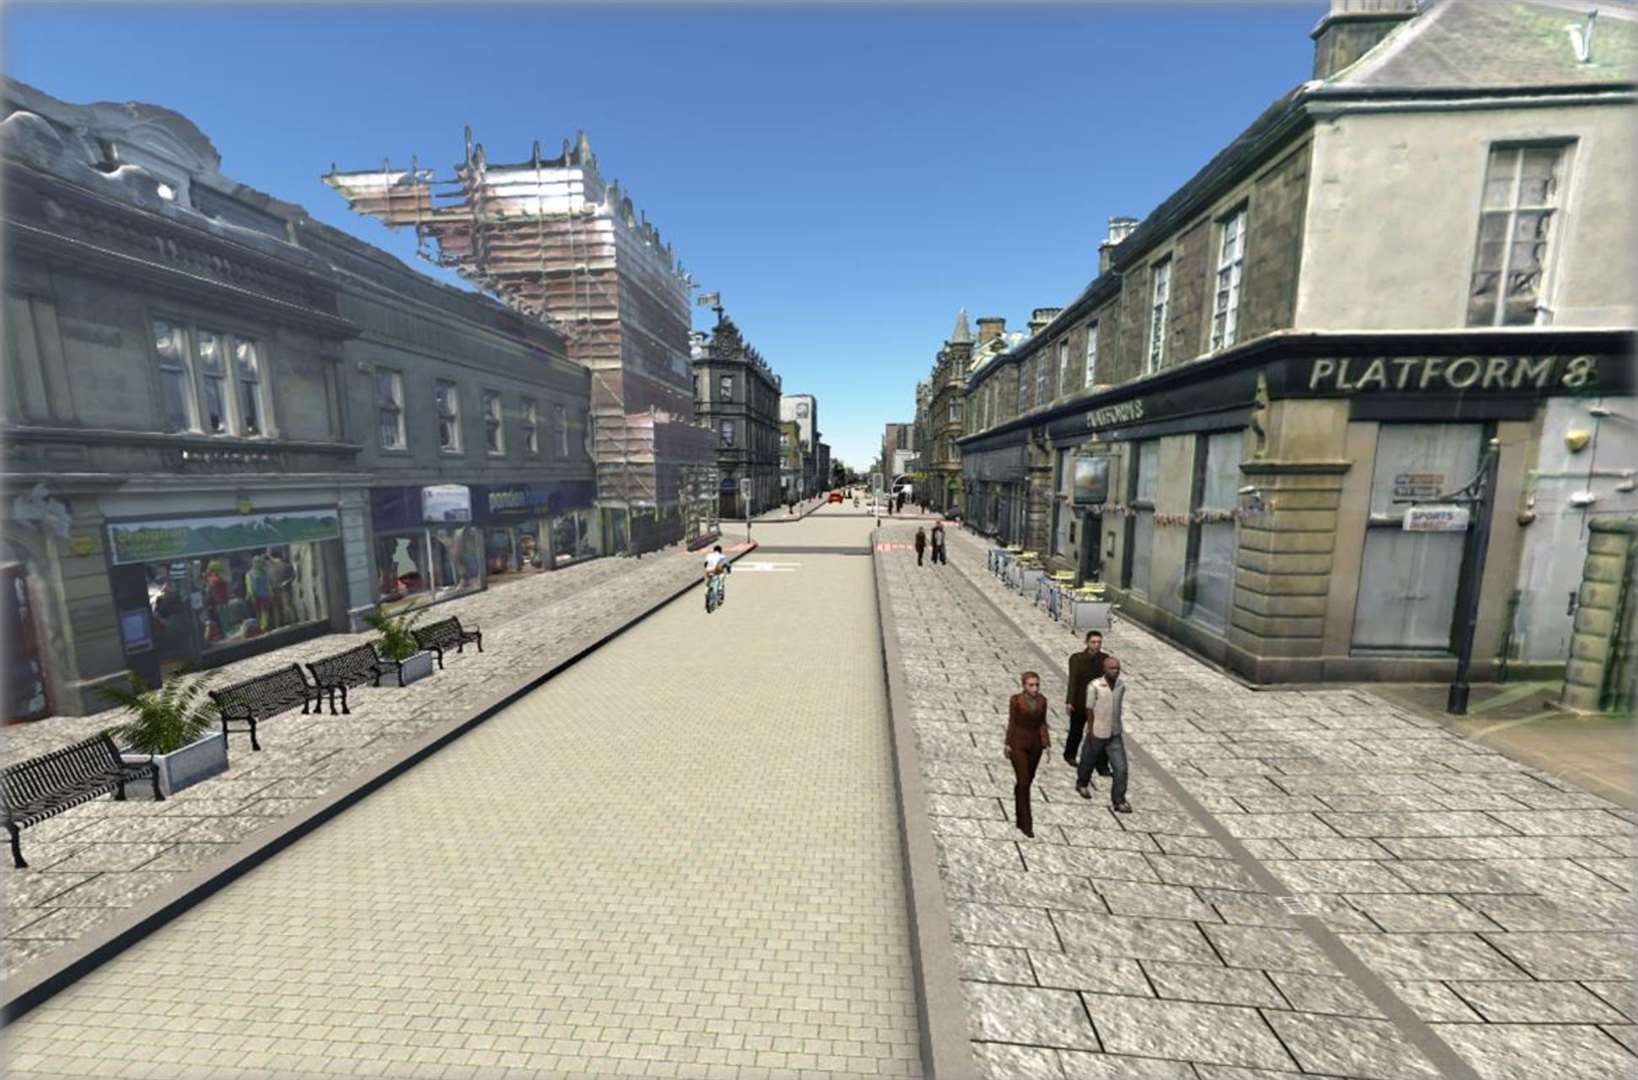 How Academy Street could look near Platform 8.